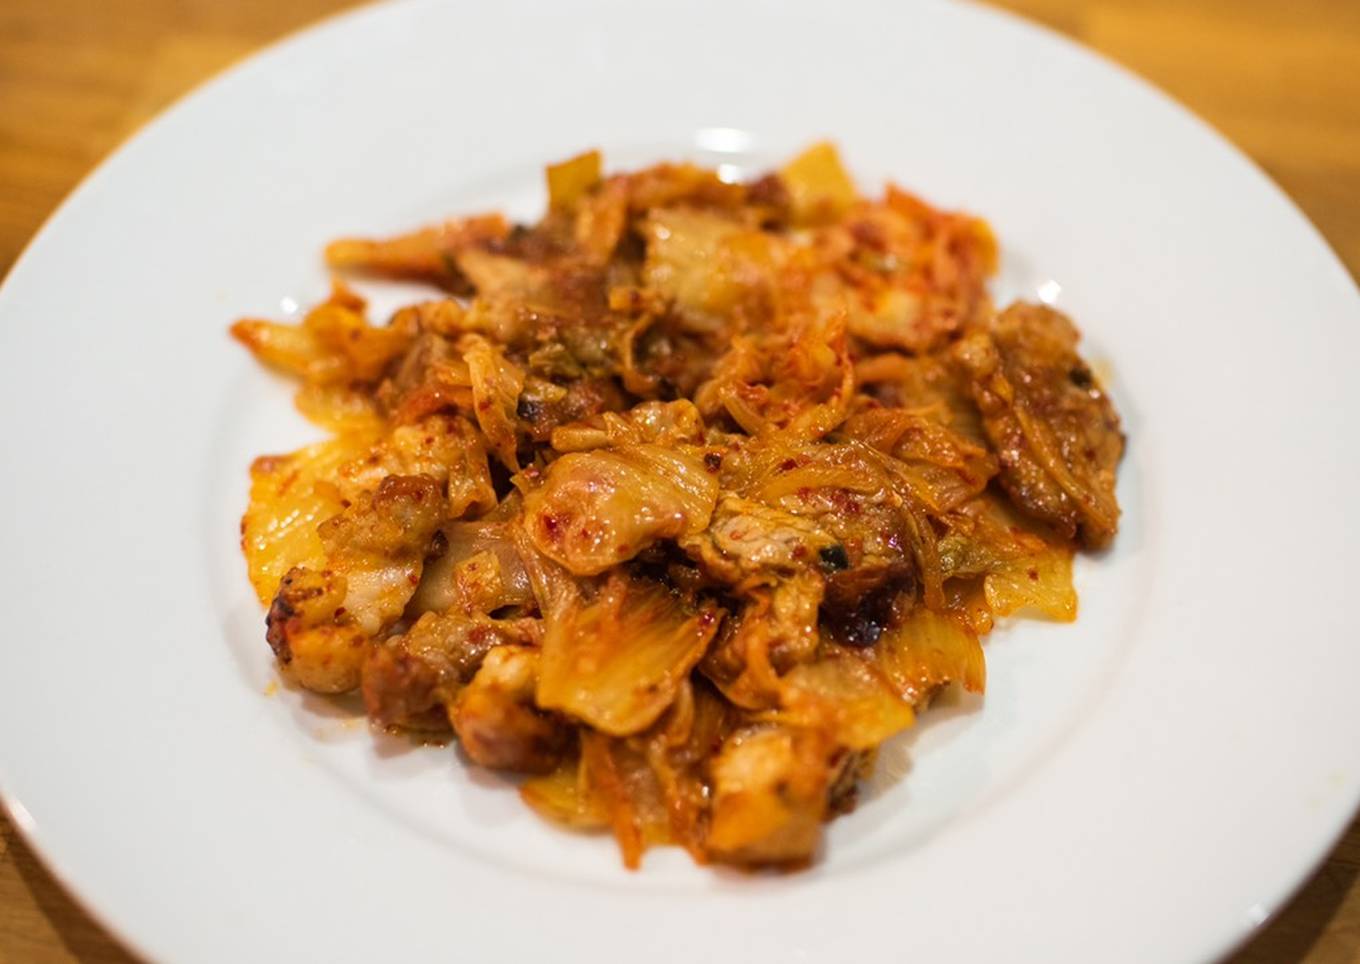 stir fried kimchi and pork